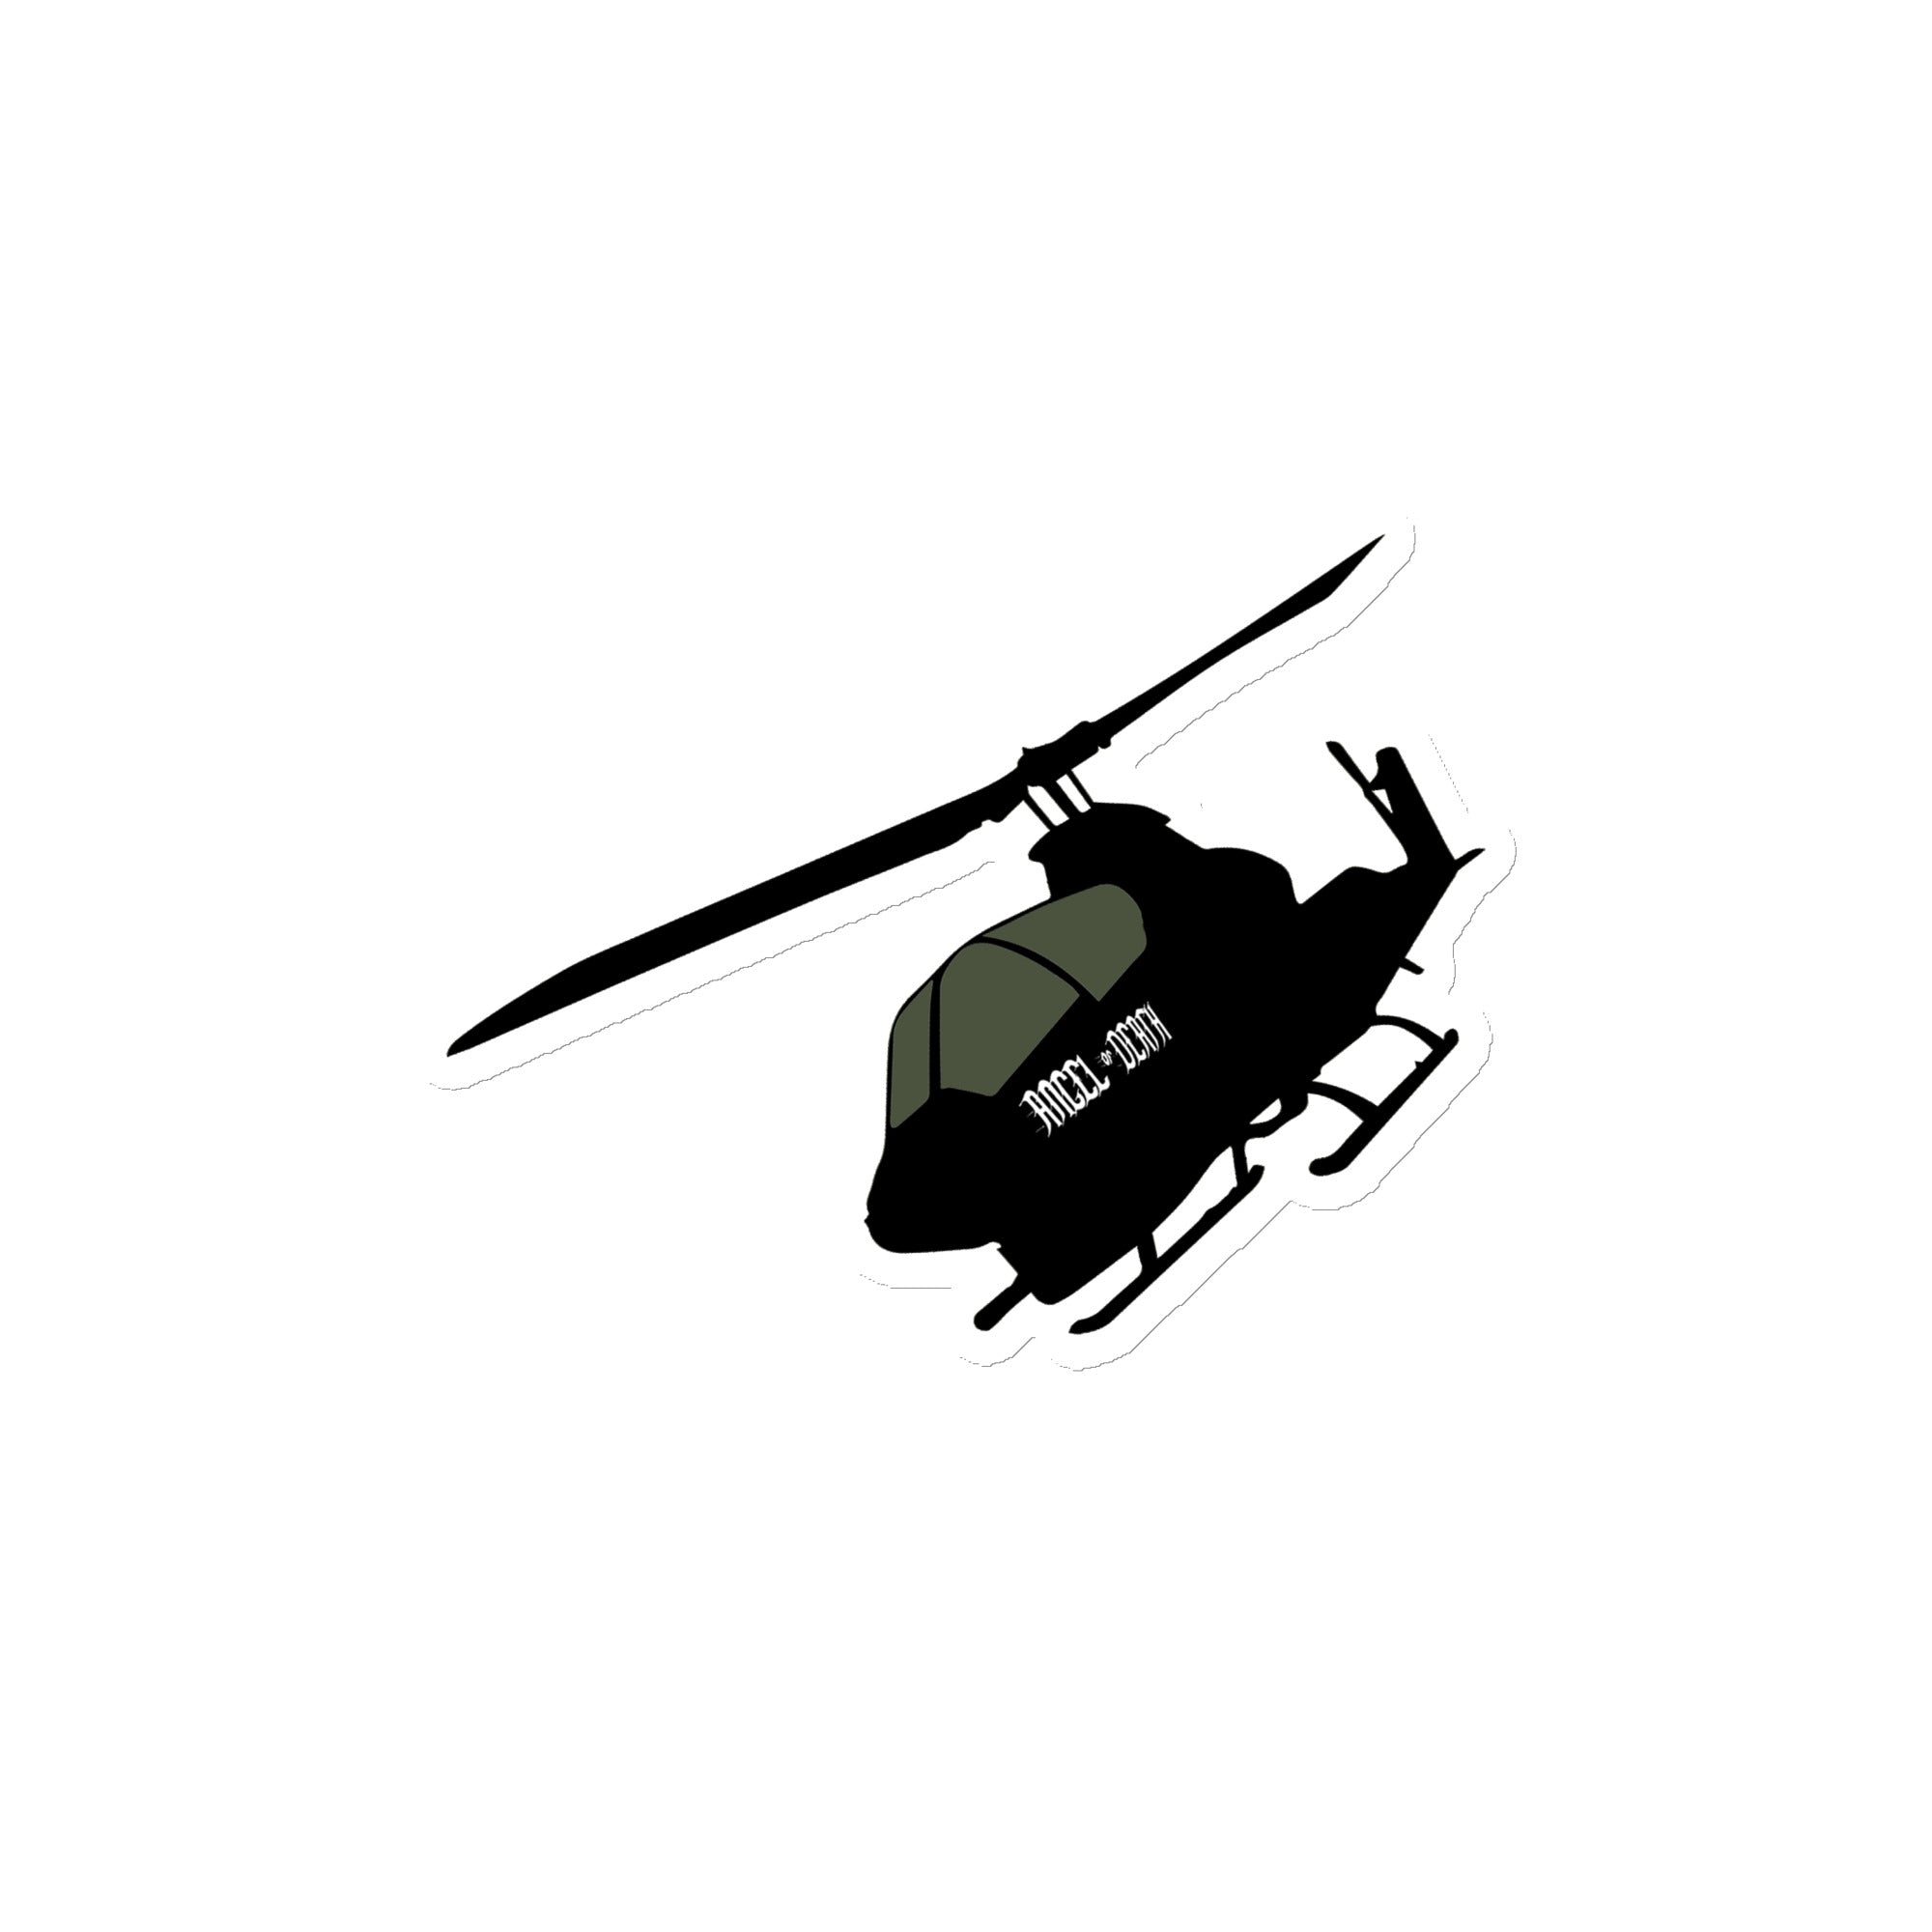 AH-1 Cobra "Angel of Death" Die Cut Magnet - I Love a Hangar